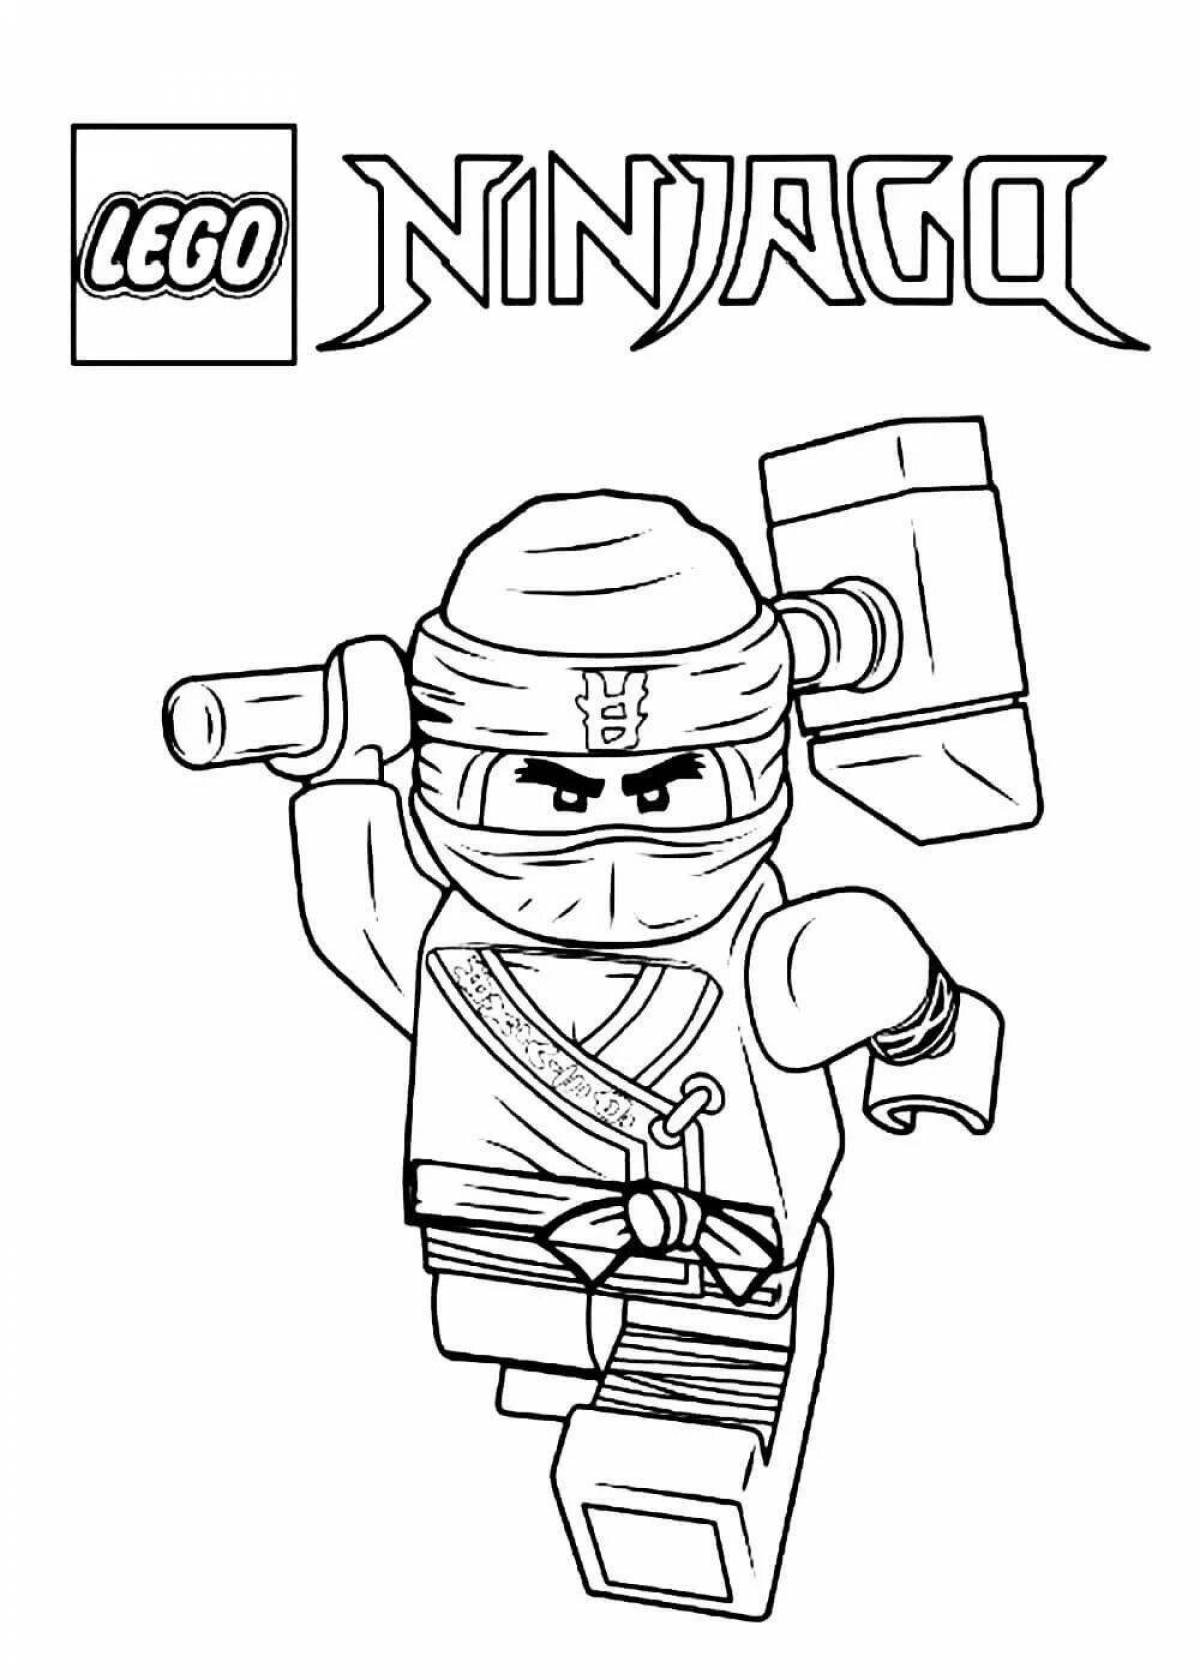 Lego ninjago jay animated coloring book